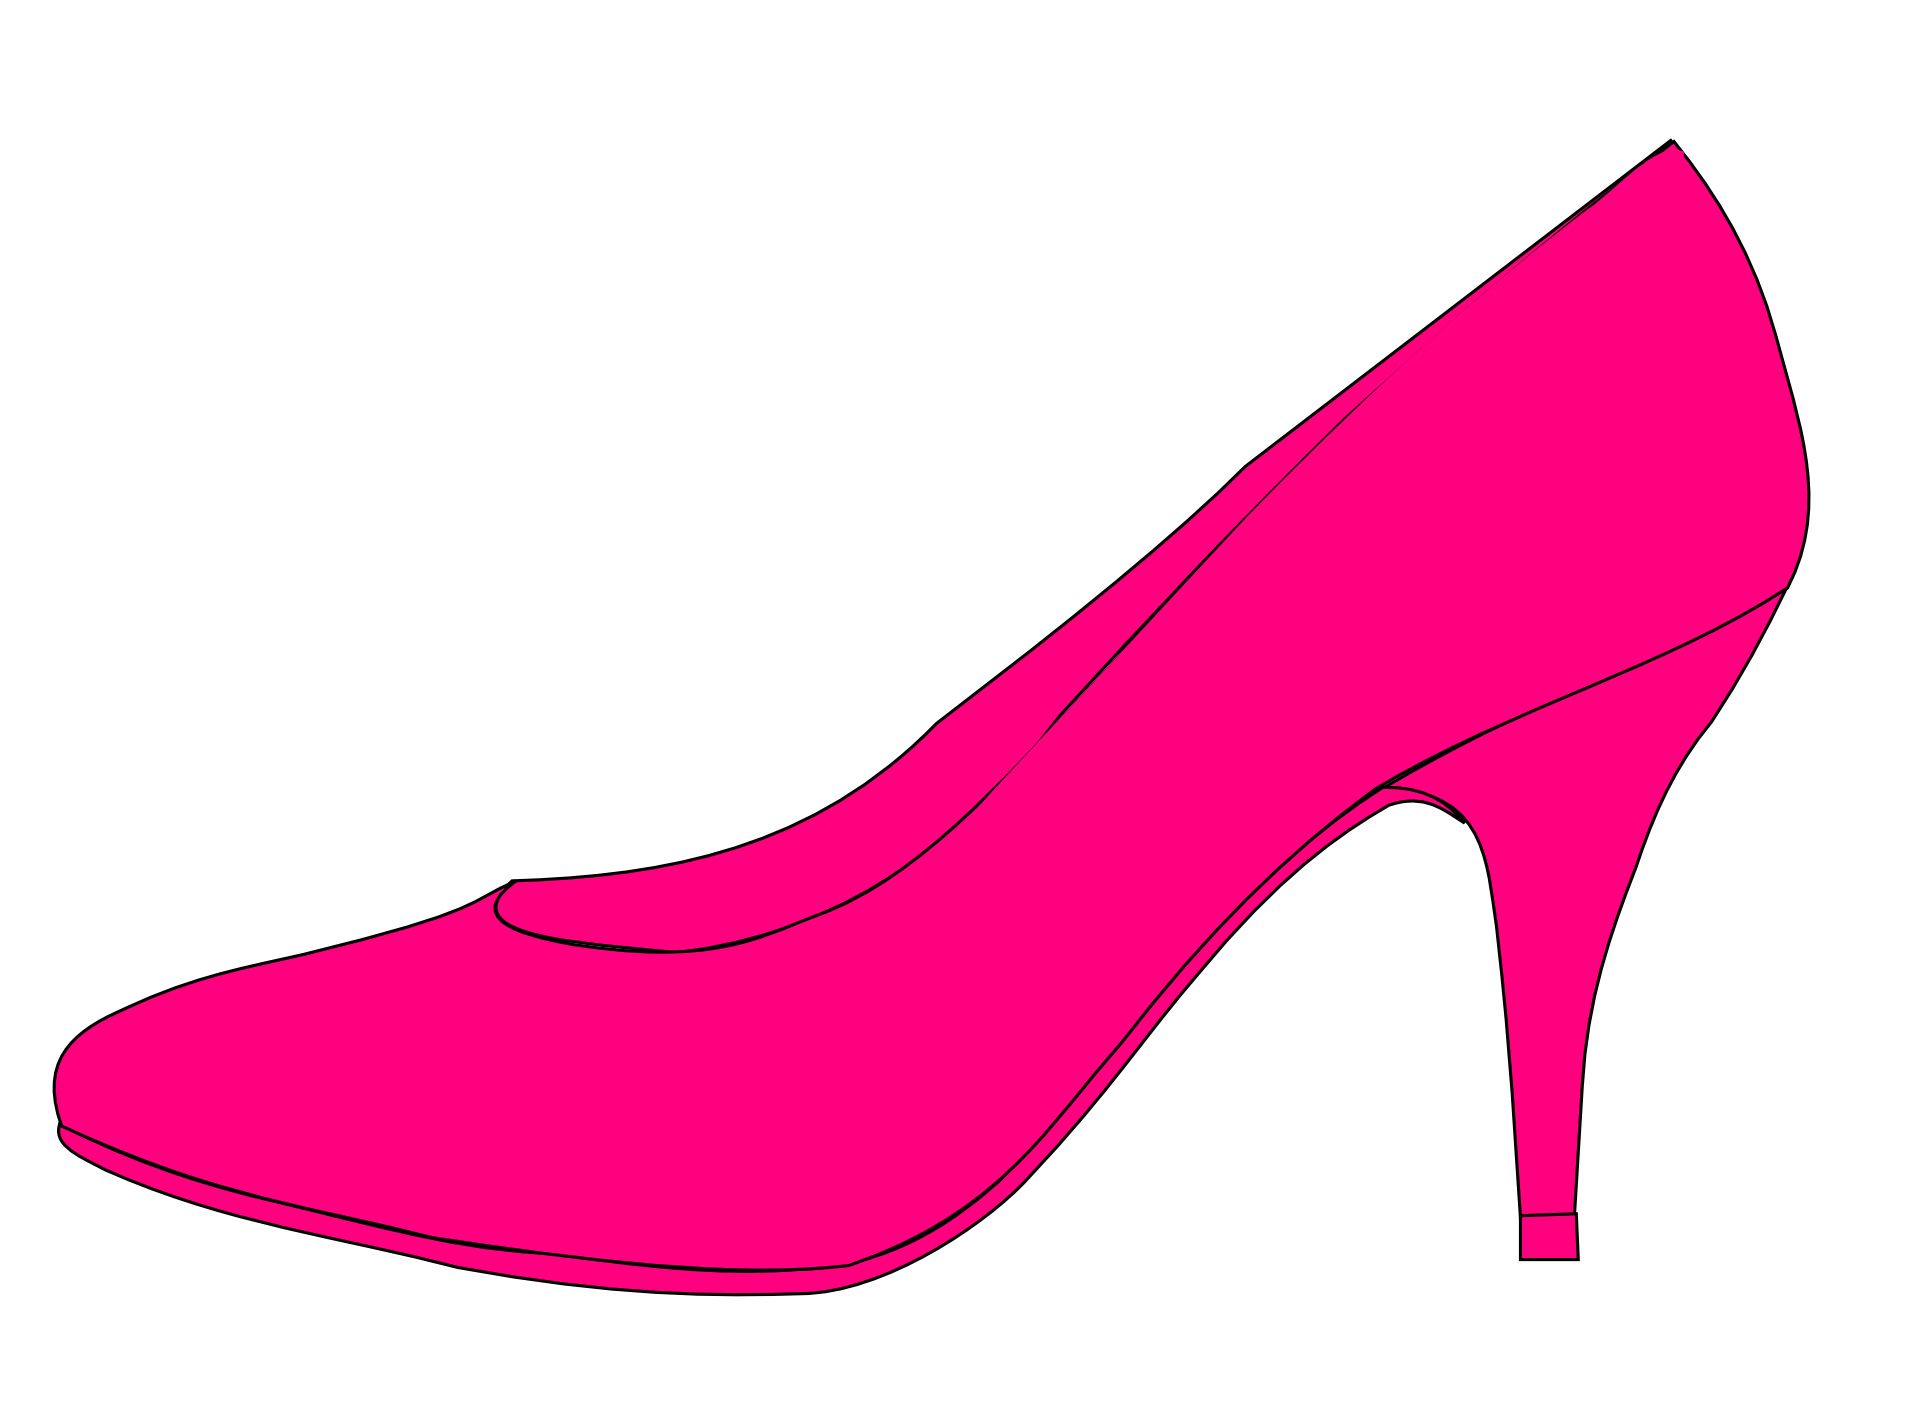 Pink shoes heel drawing free image download